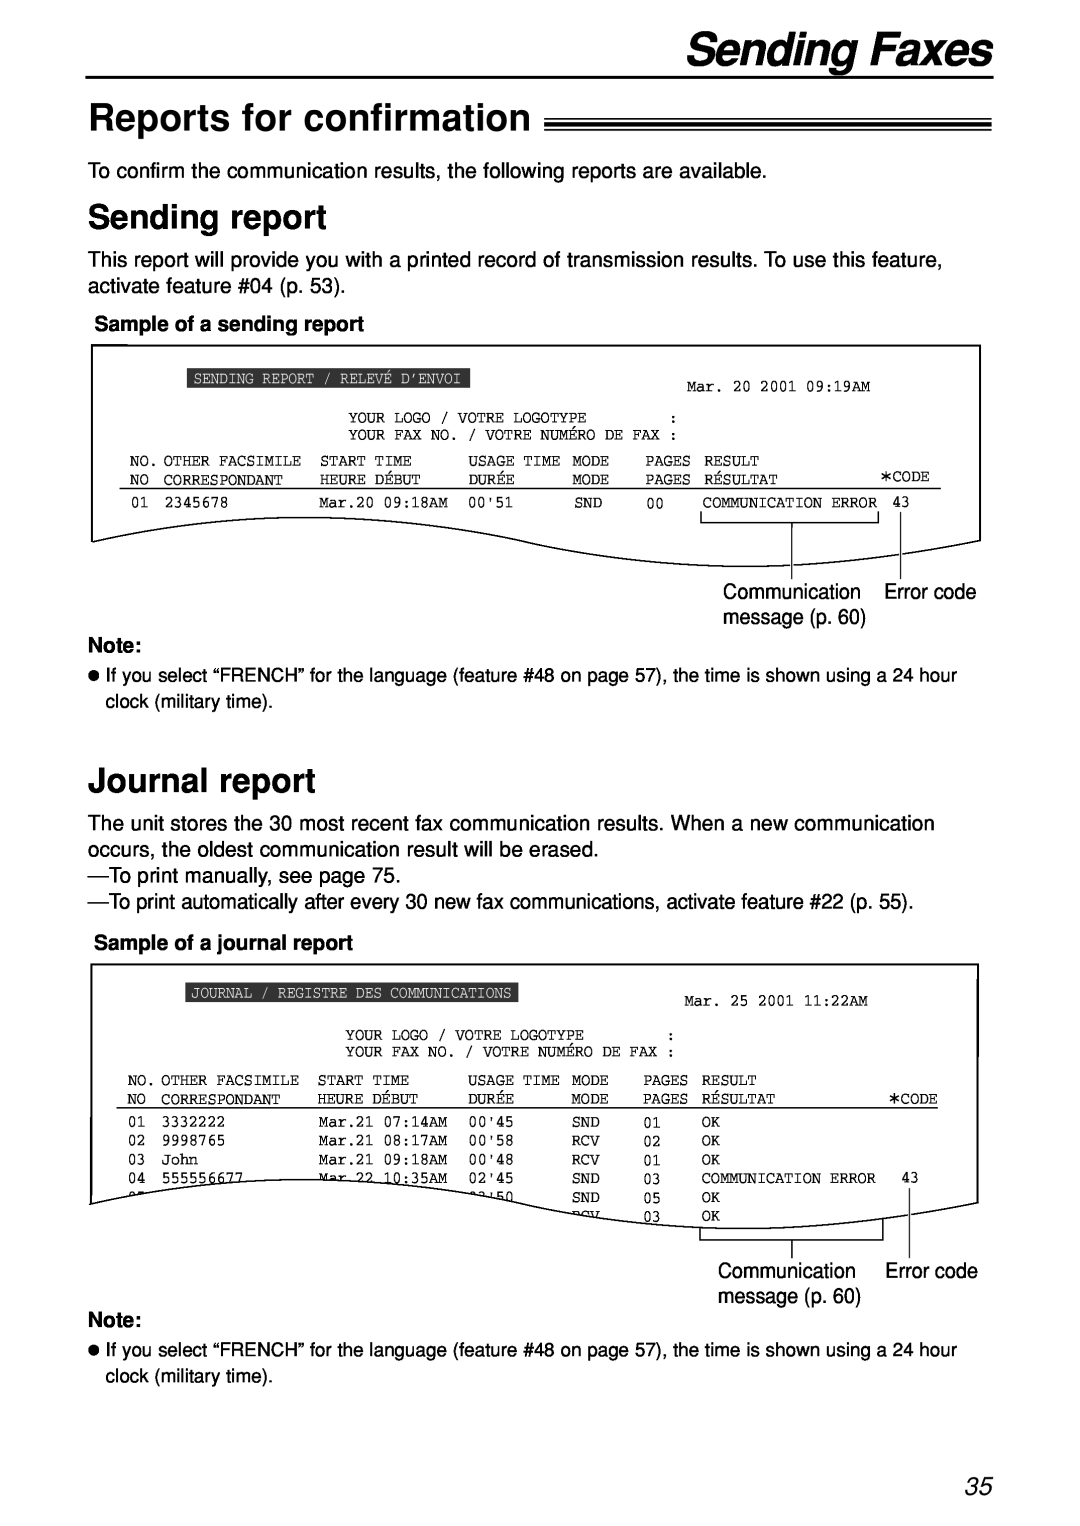 Panasonic KX-FL501C manual Reports for confirmation, Sending report, Journal report, Sending Faxes 